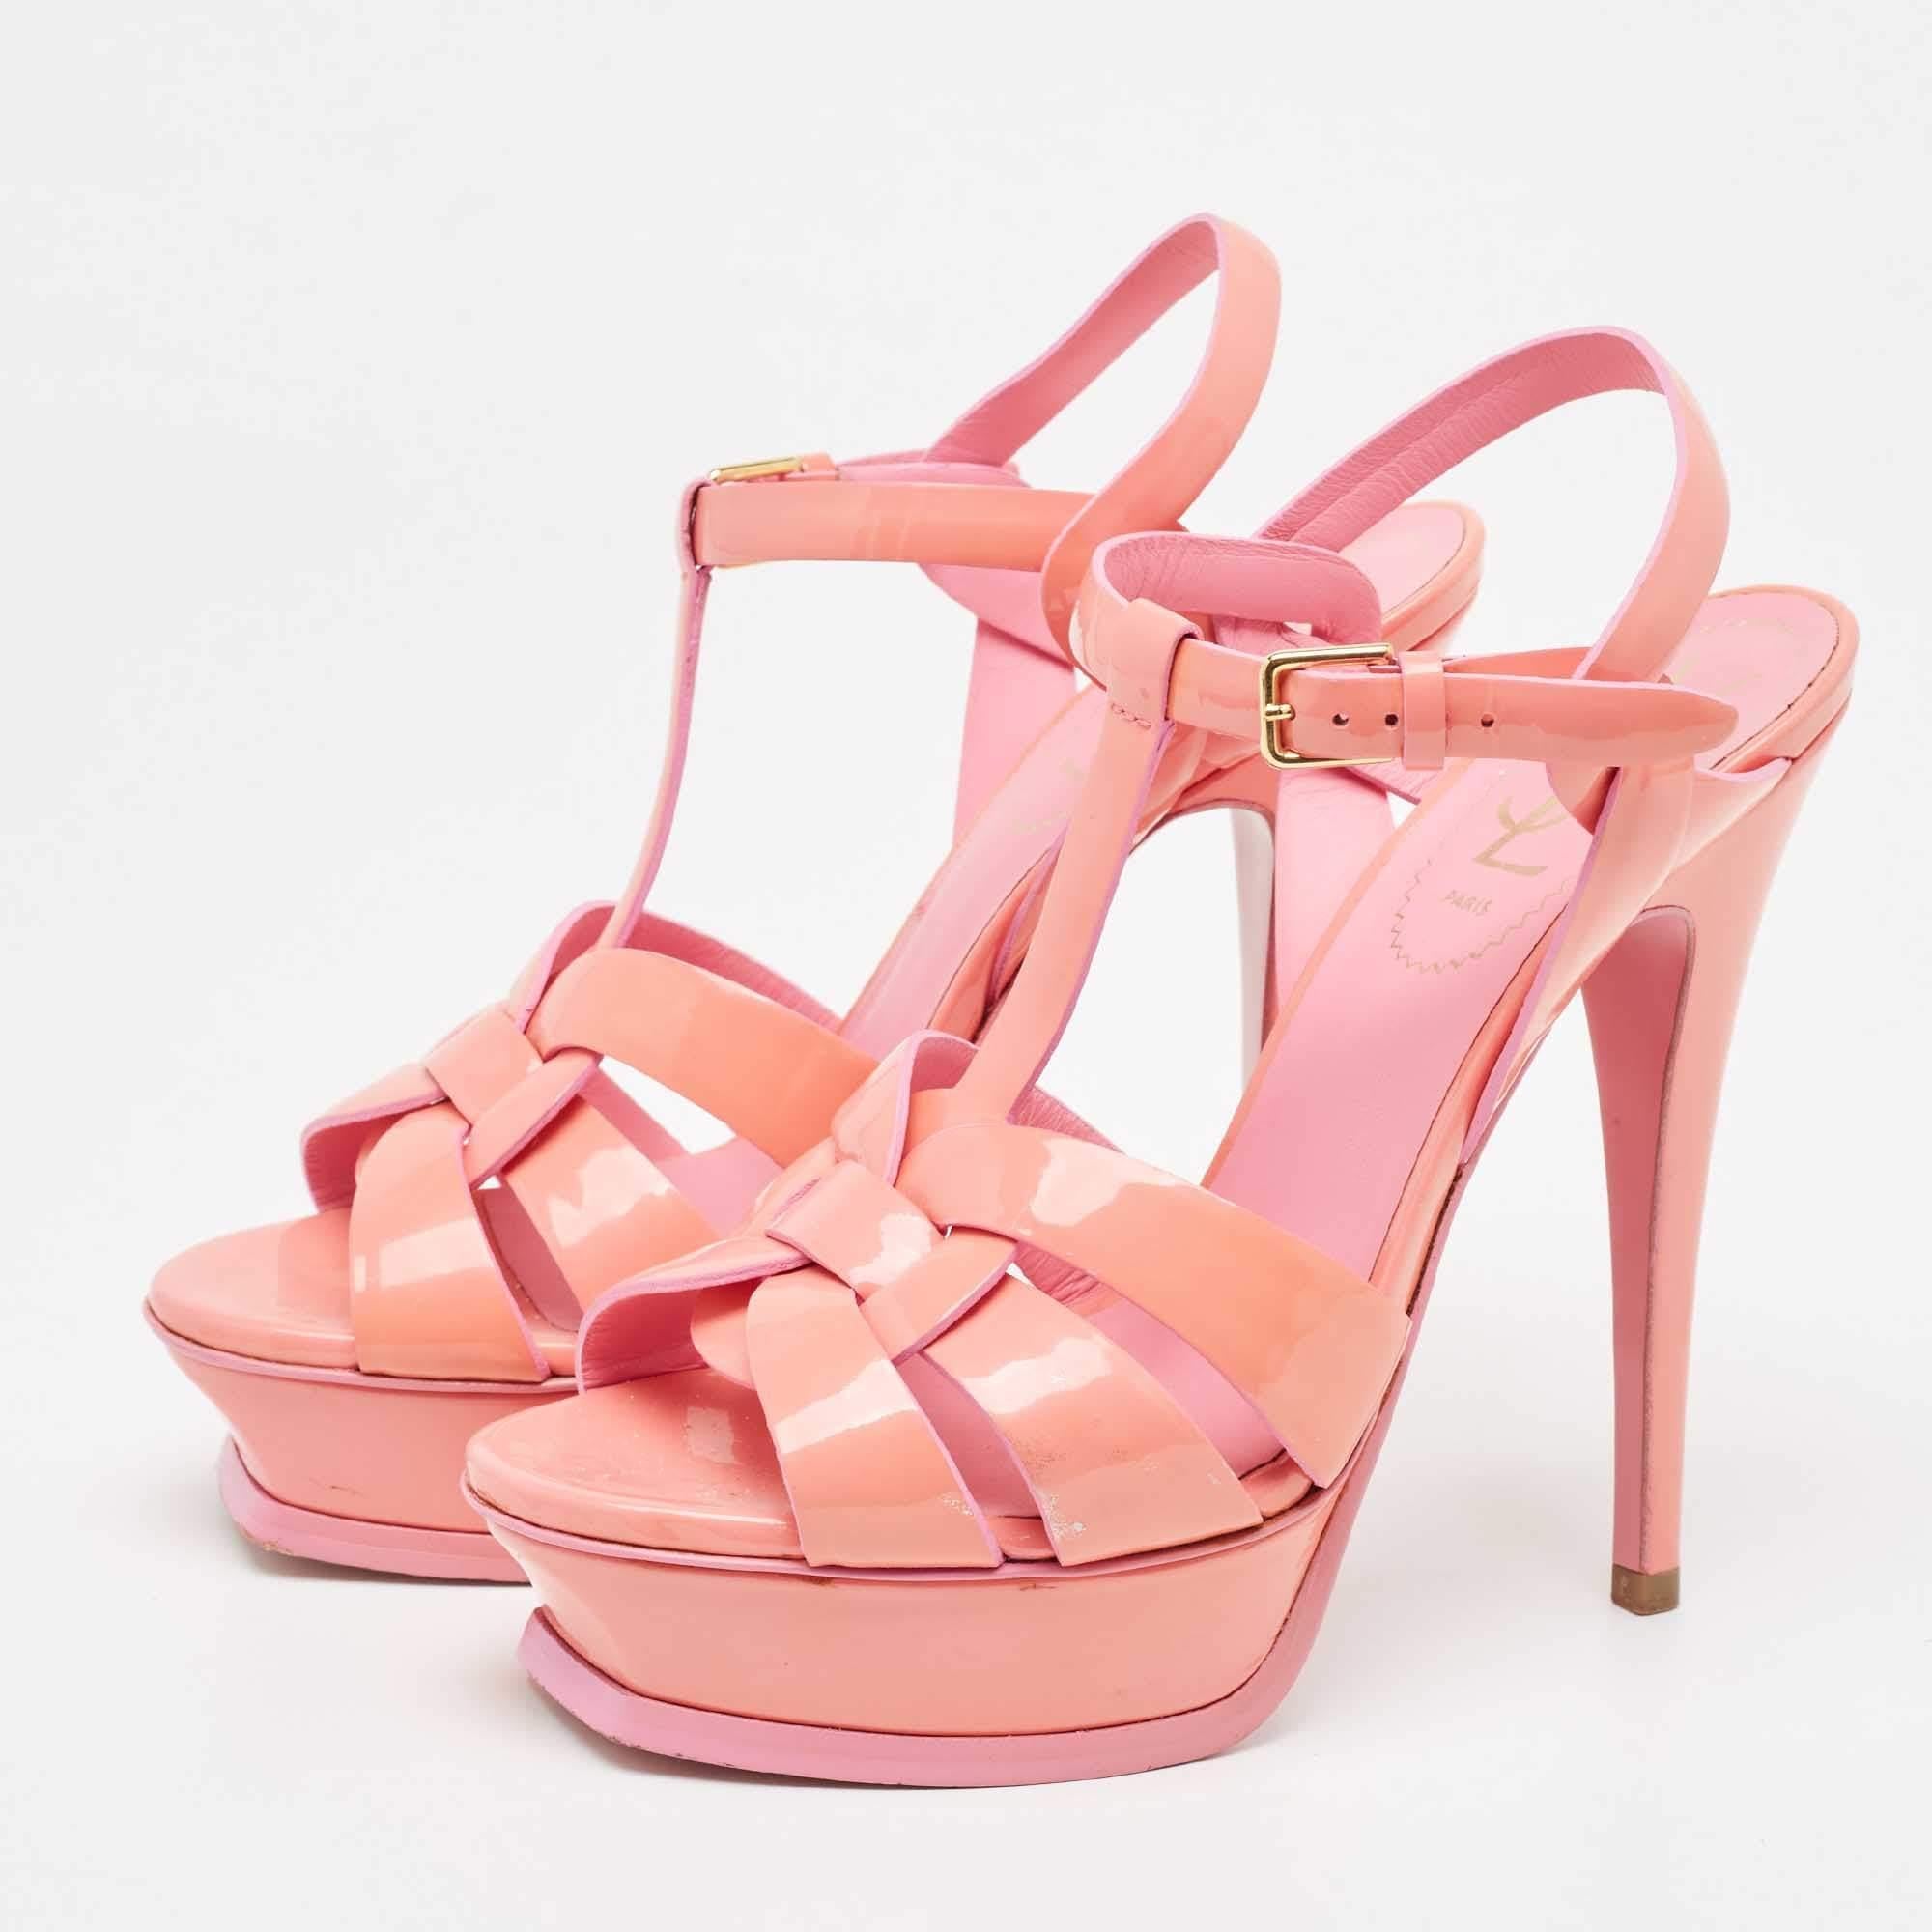 Yves Saint Laurent Pink Patent Tribute Sandals Size 37 For Sale 3